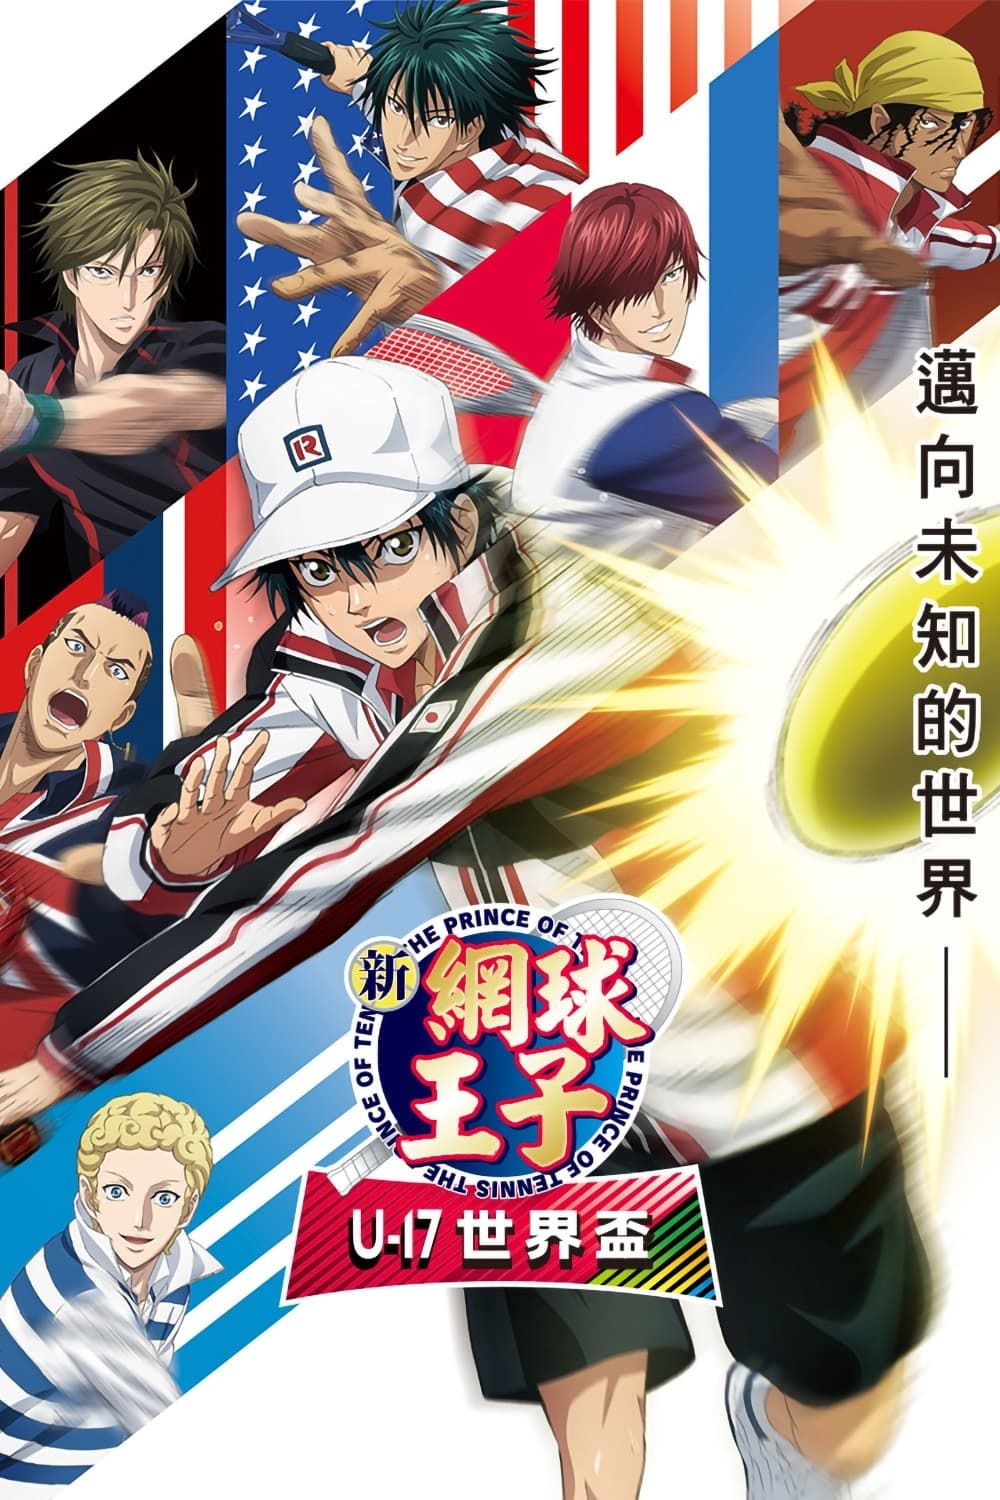 [Shounen] Shin Tennis no Ouji-sama: U-17 World Cup (Dub) (TV) Best Anime